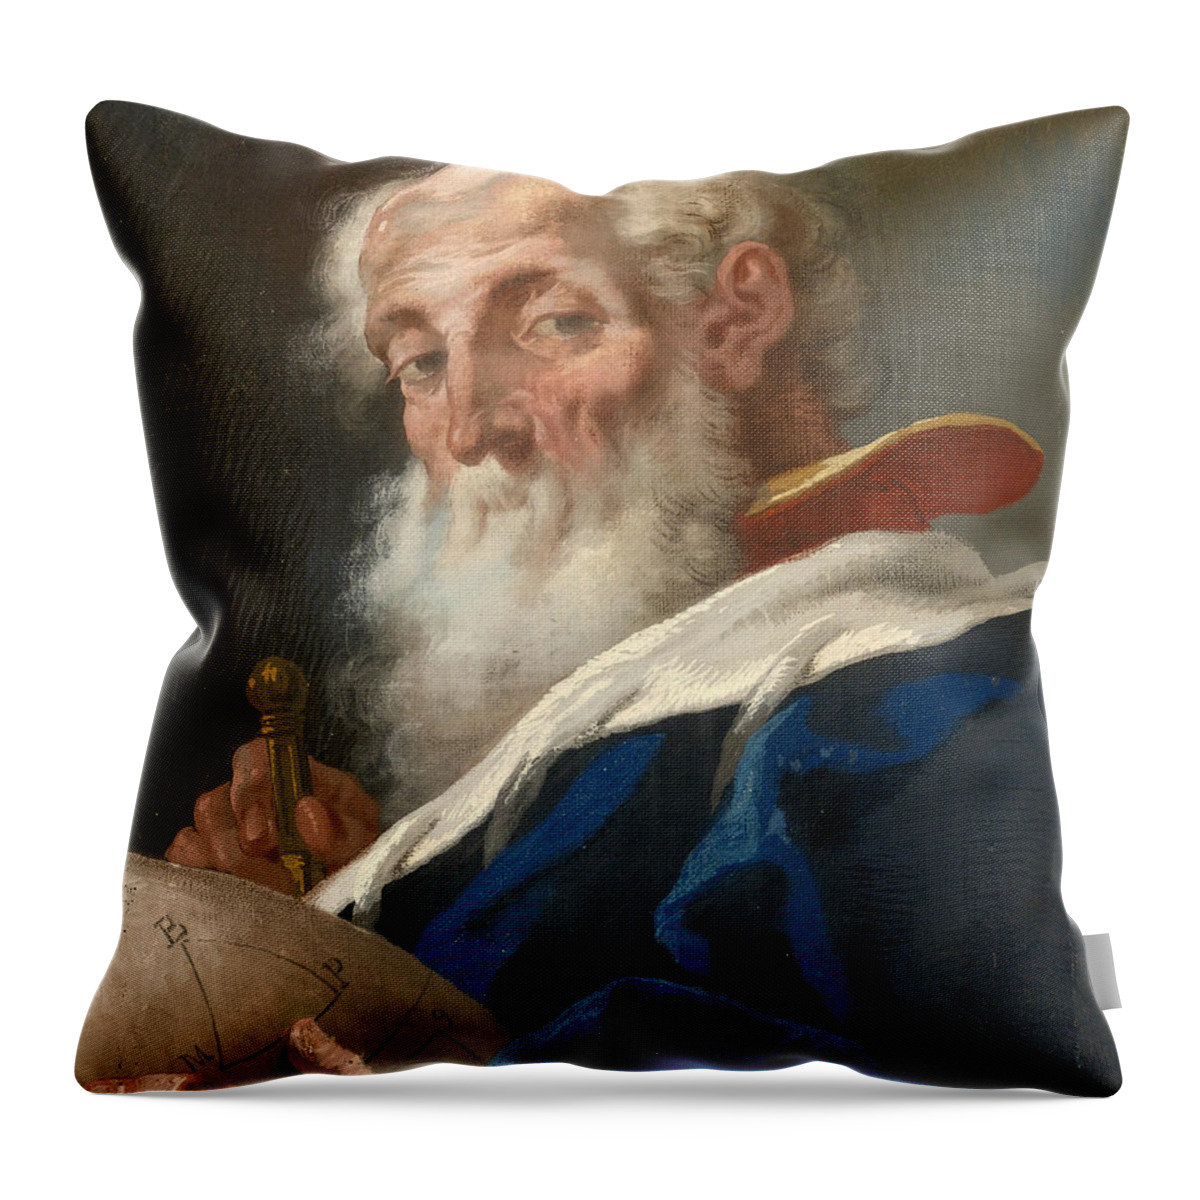 Mattia Bortoloni Throw Pillow featuring the painting Portrait of an Astronomer Half-Length by Mattia Bortoloni